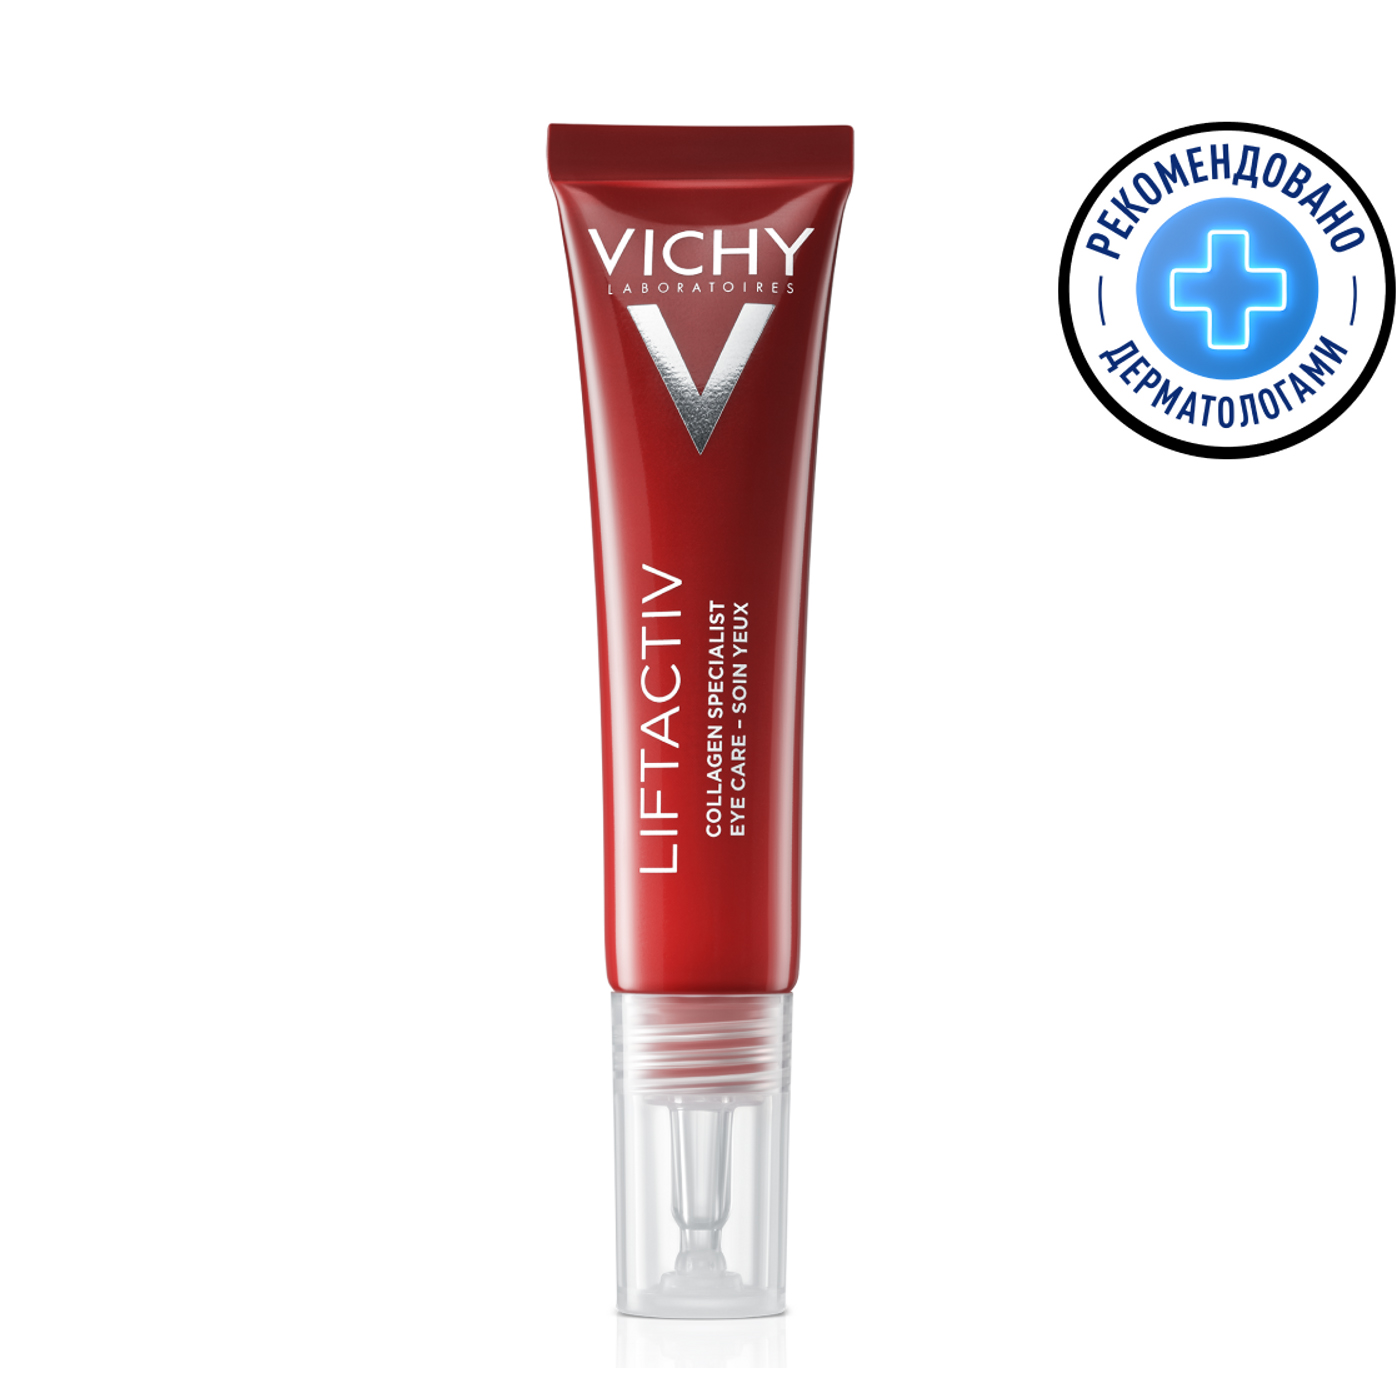 Vichy Крем для кожи вокруг глаз, 15 мл (Vichy, Liftactiv)